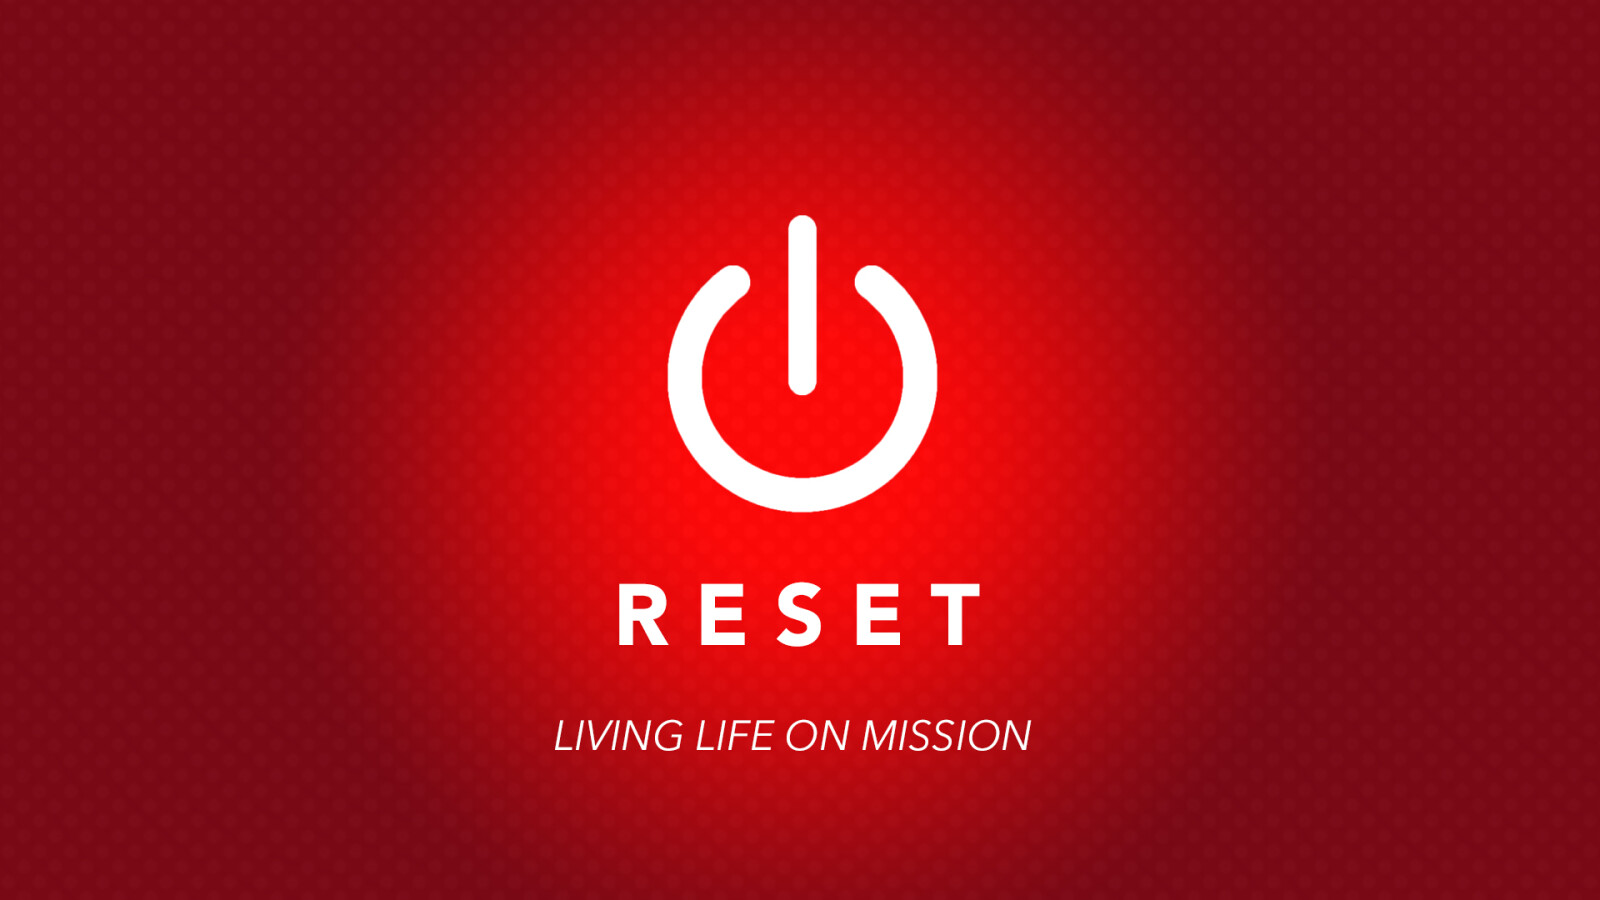 Reset: Life on Mission